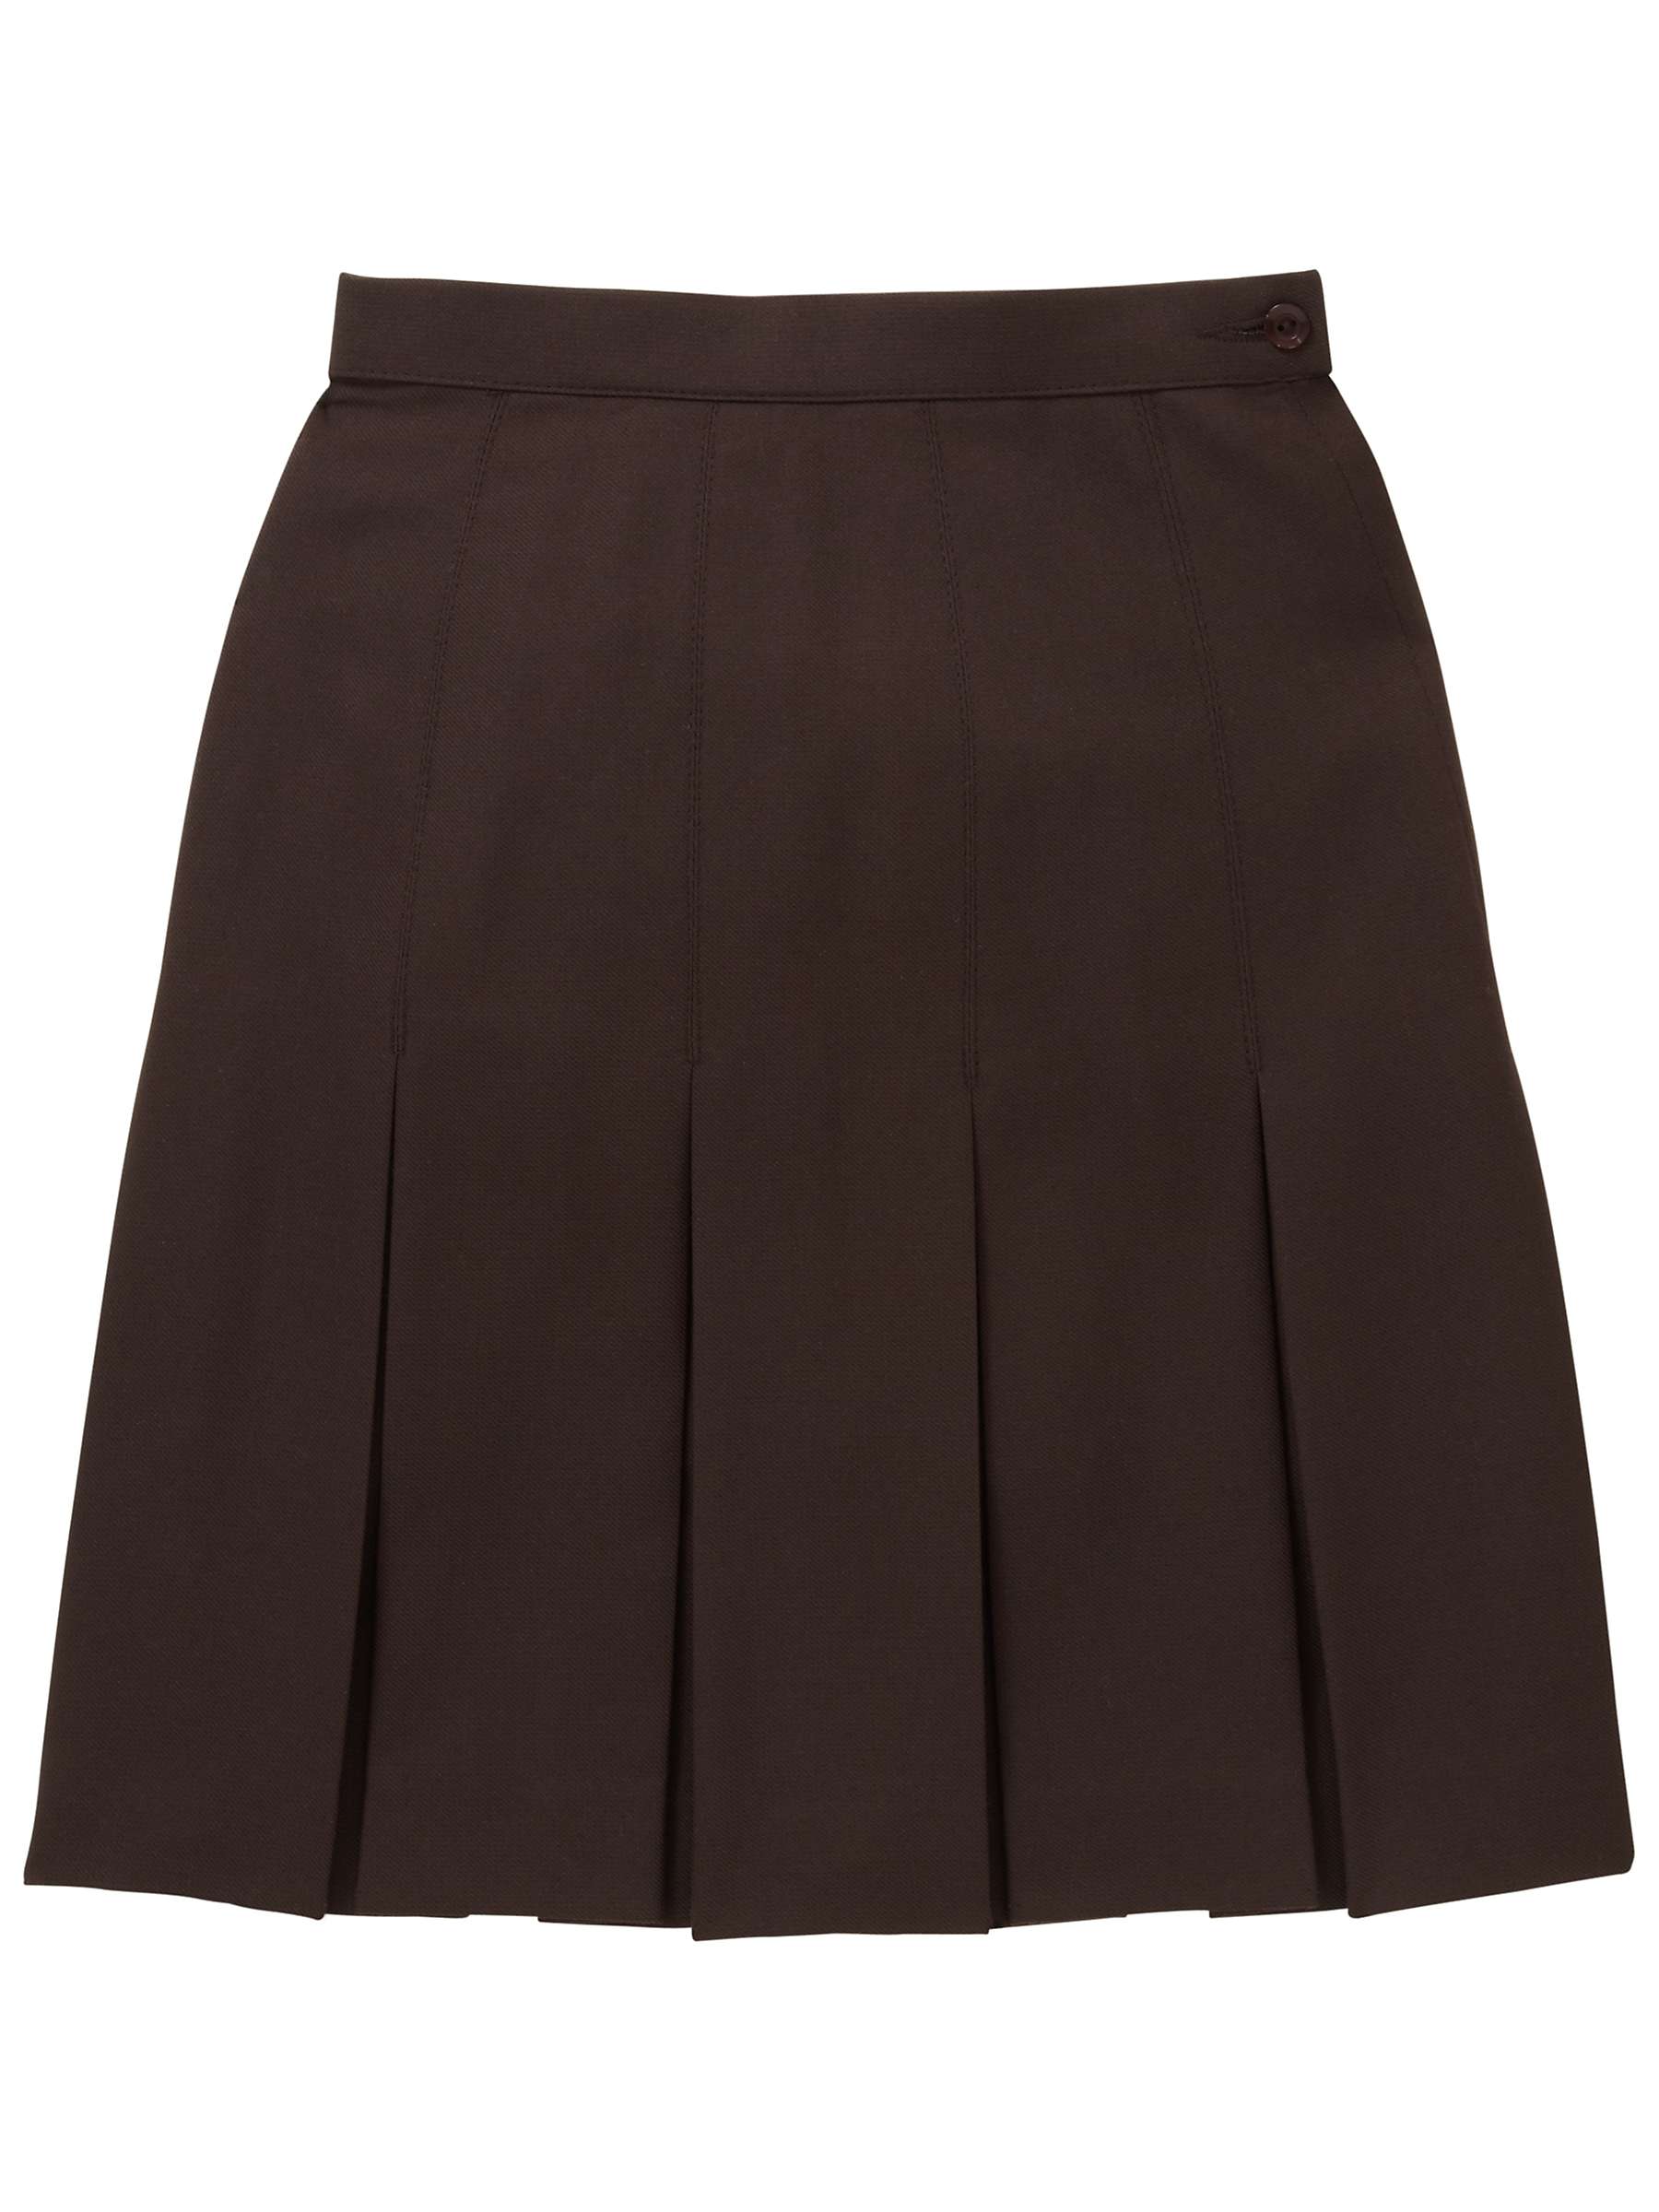 Buy Jordanhill School Girls' Box Pleat Skirt Online at johnlewis.com